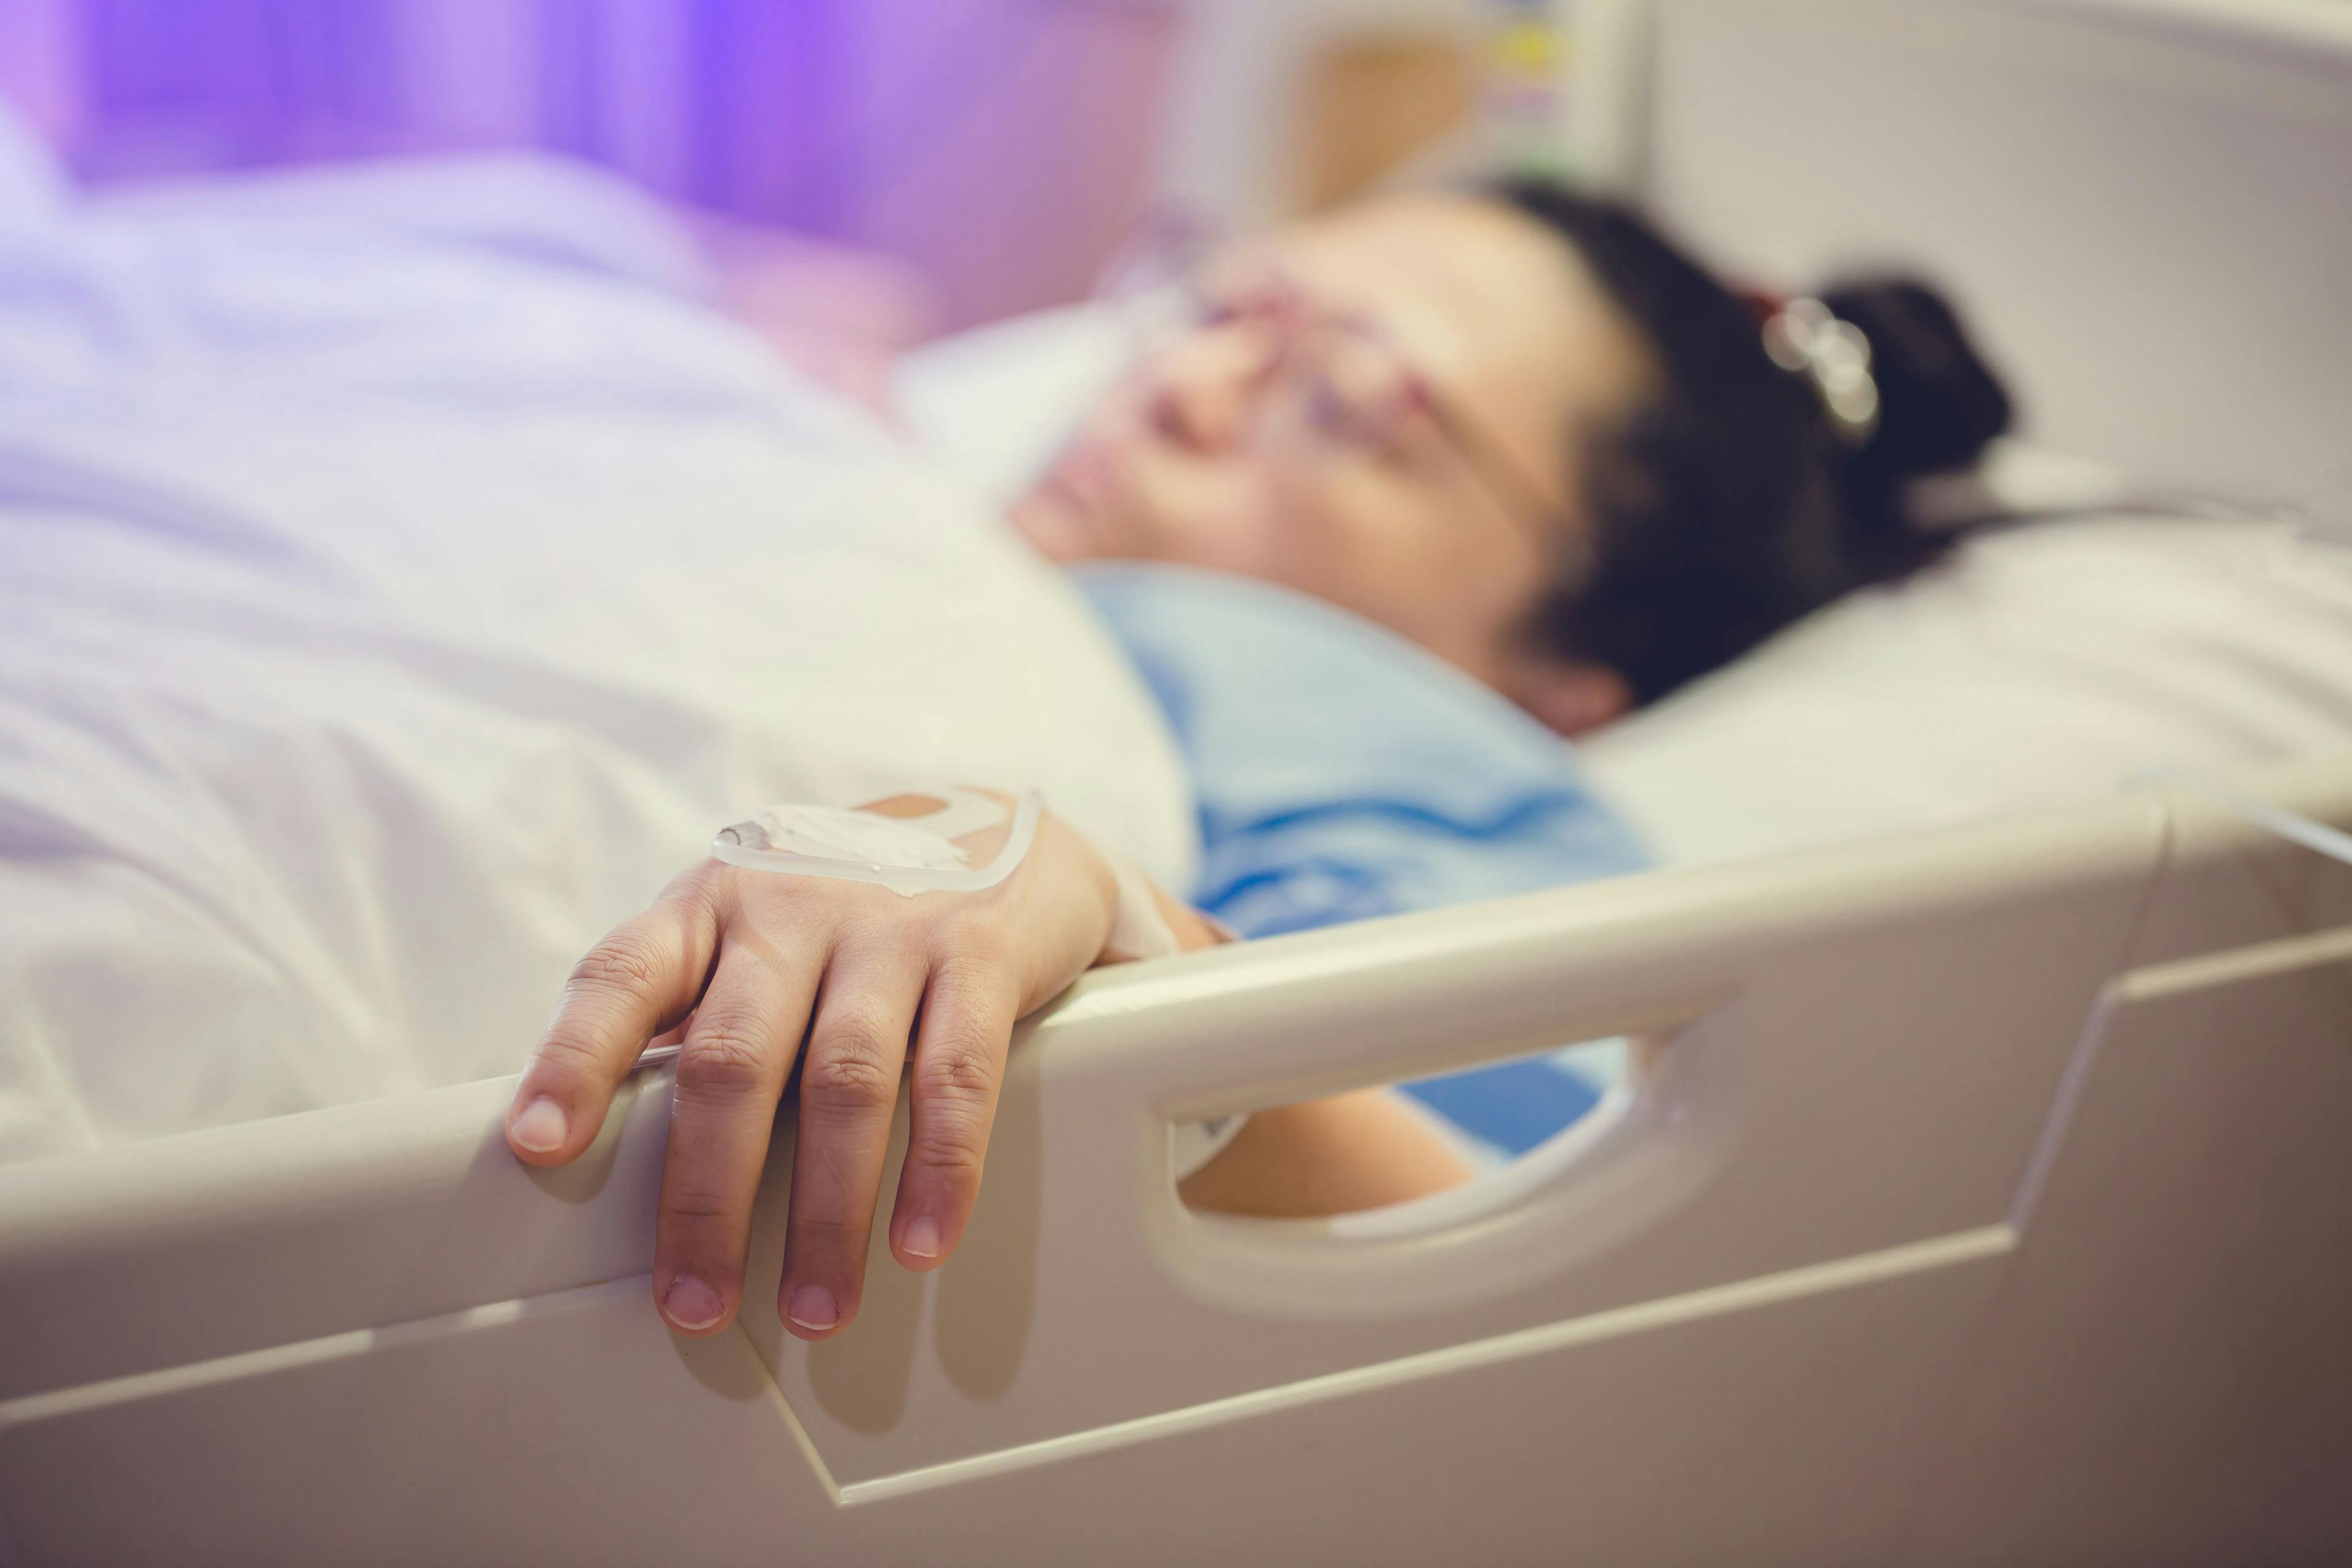 Patient in hospital bed | Image credit: Koonsiri - stock.adobe.com